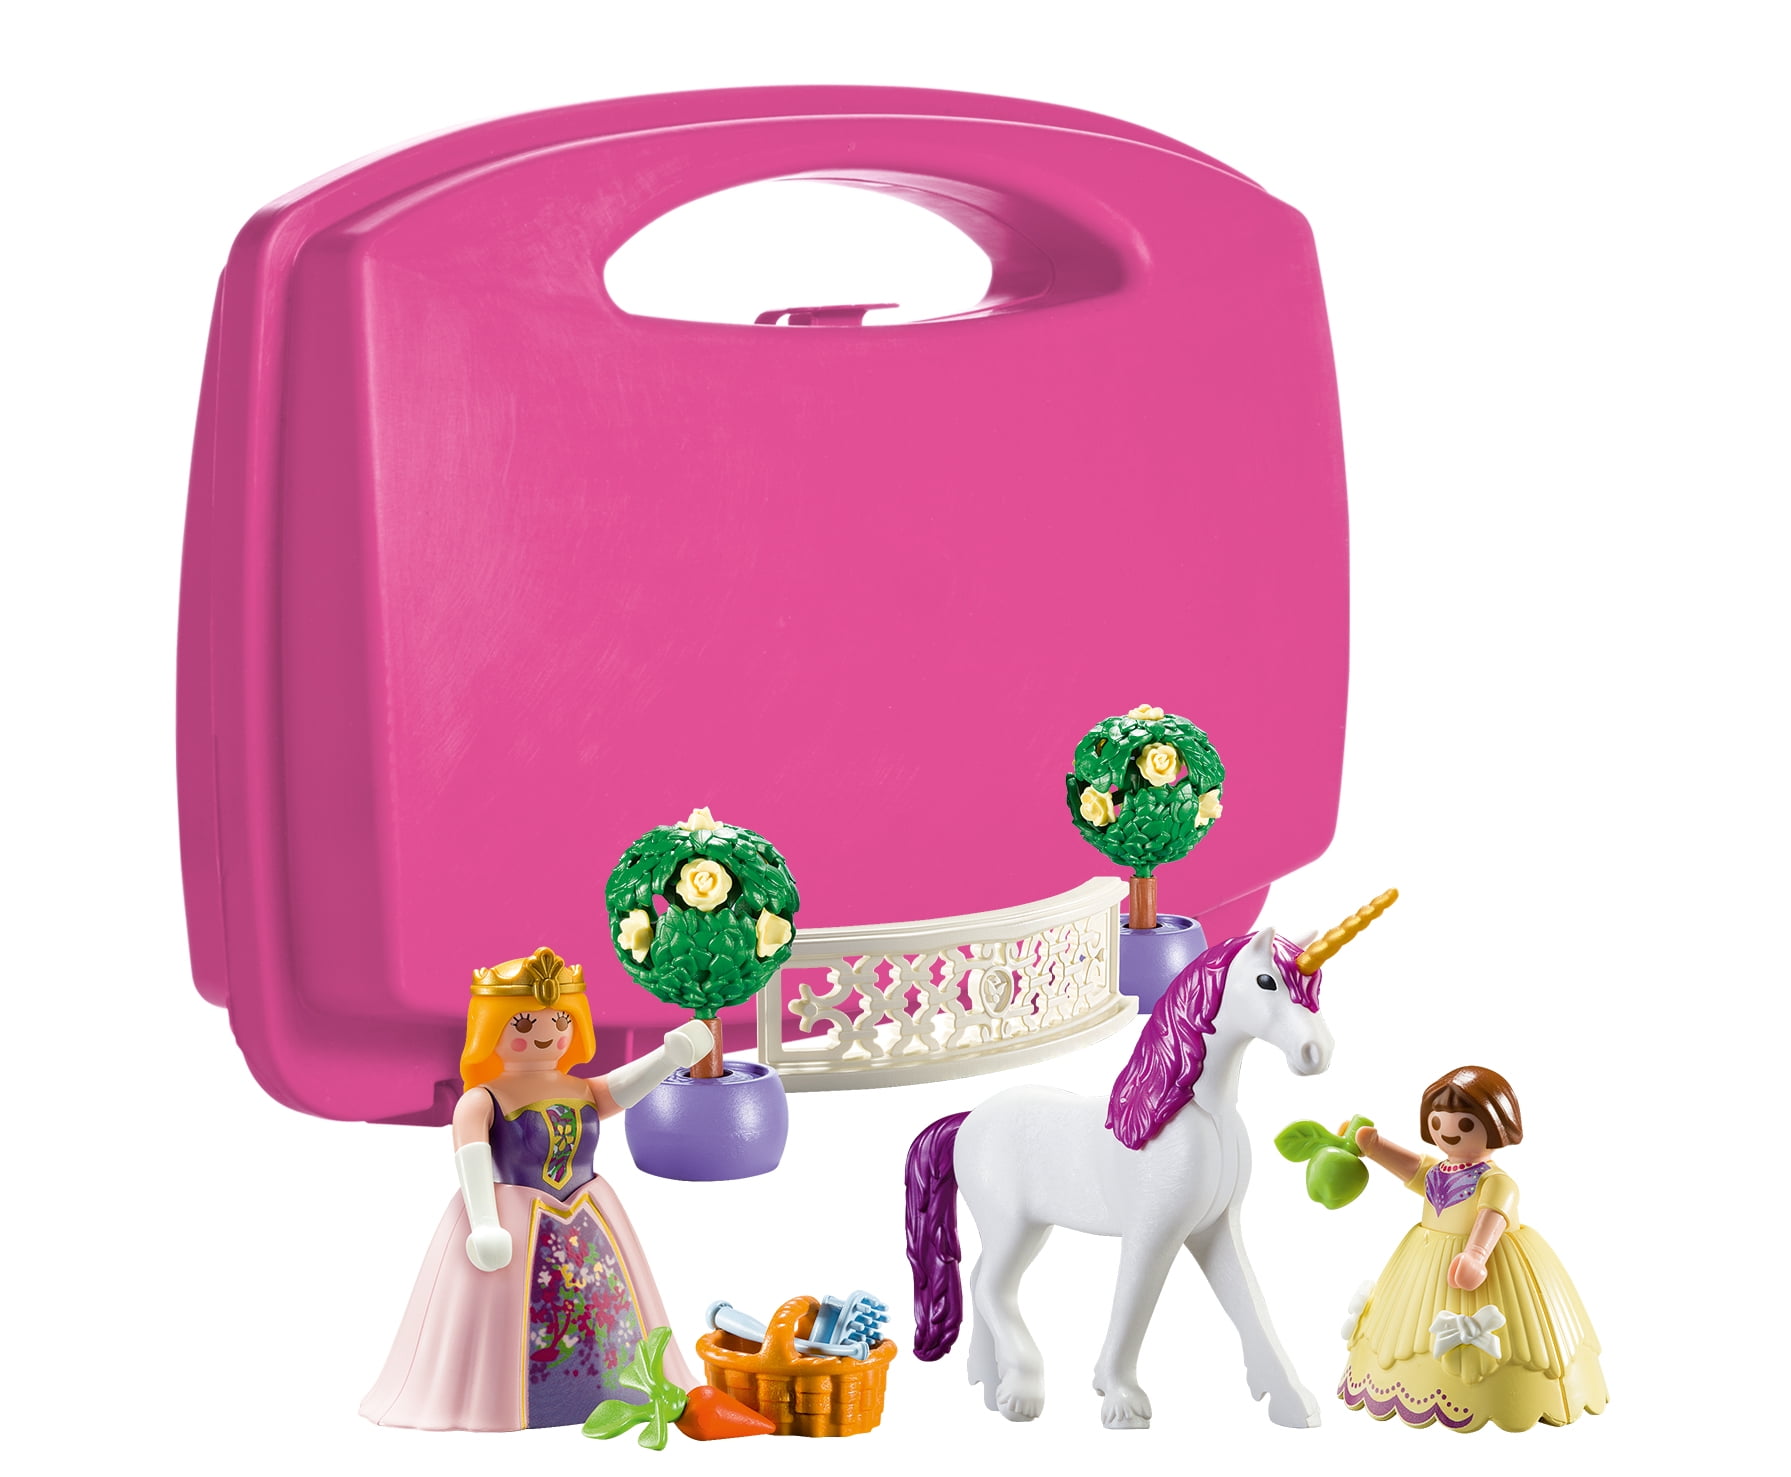 Playmobil Princess Unicorn Carry Case